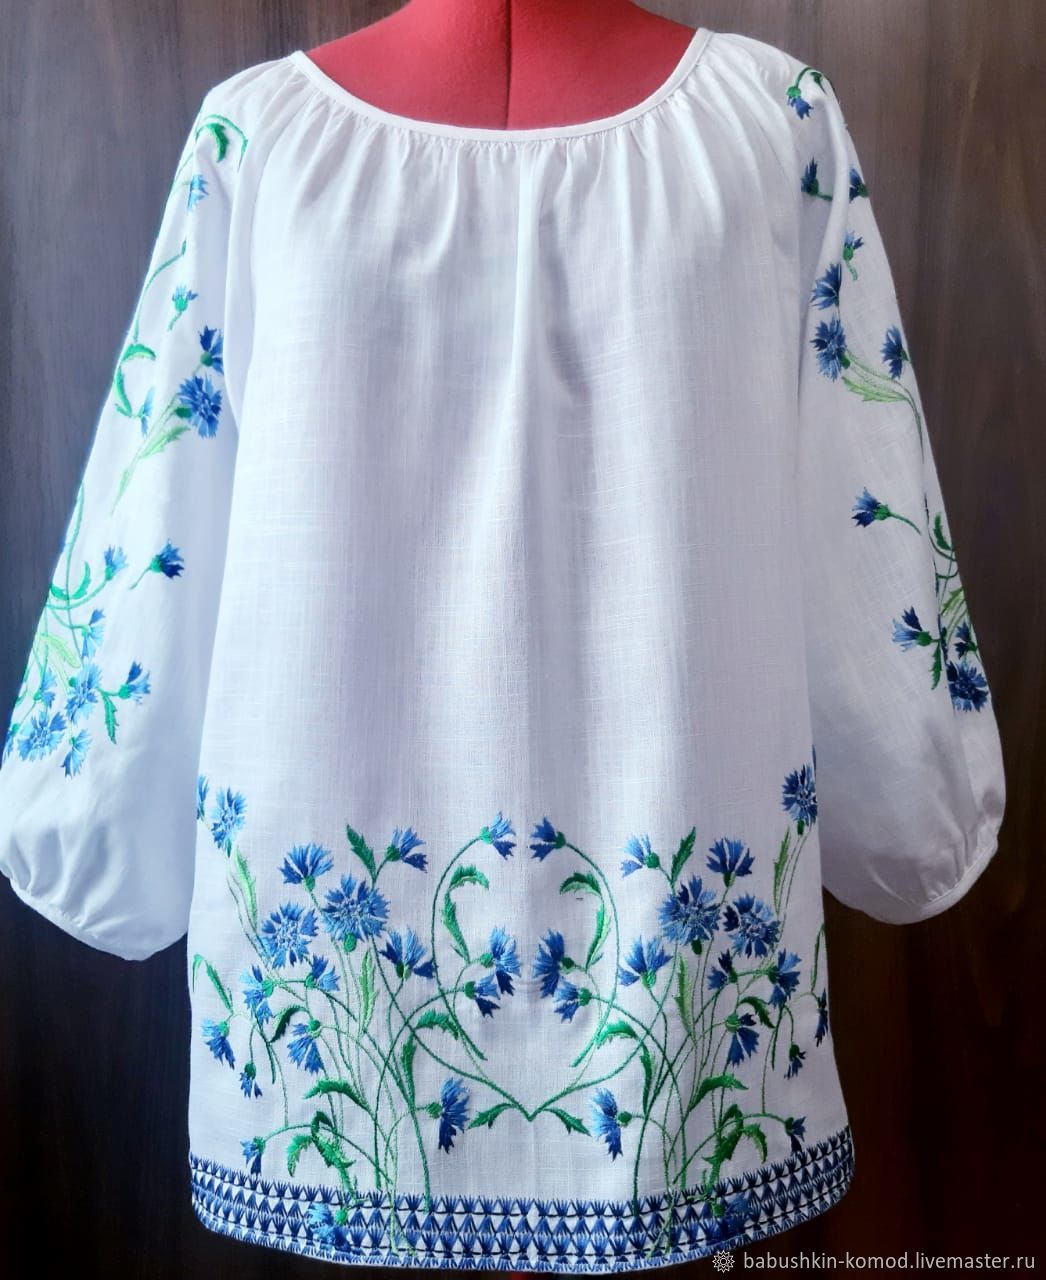 Women's embroidered blouse 'Cornflowers' ZHR3-232, Blouses, Temryuk,  Фото №1